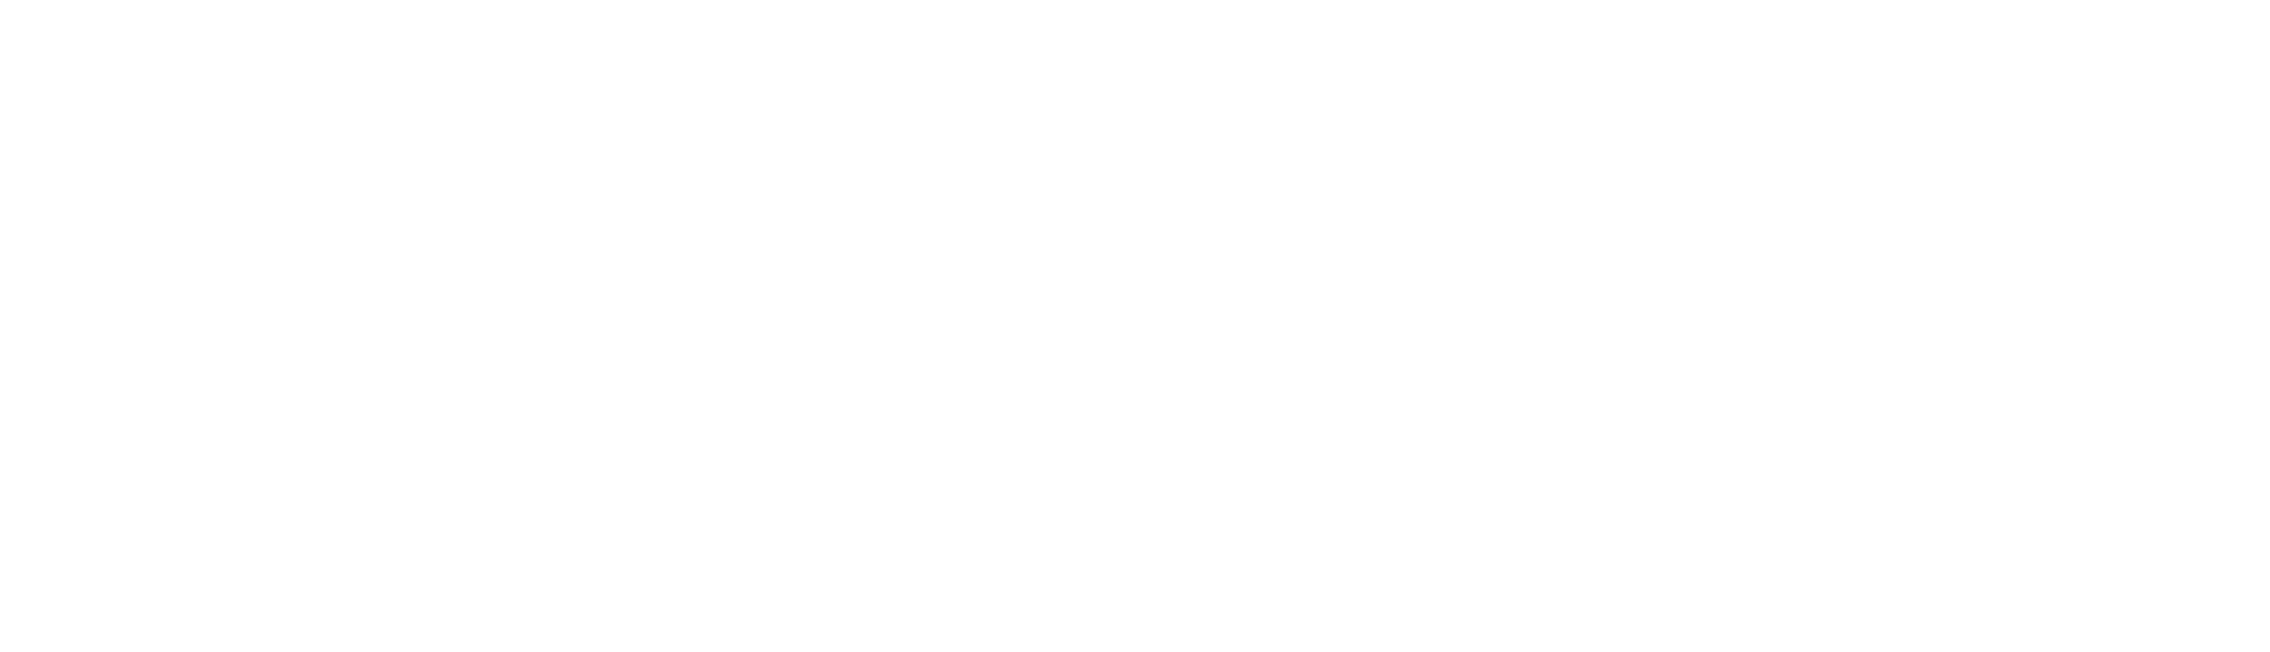 paramount audience impact